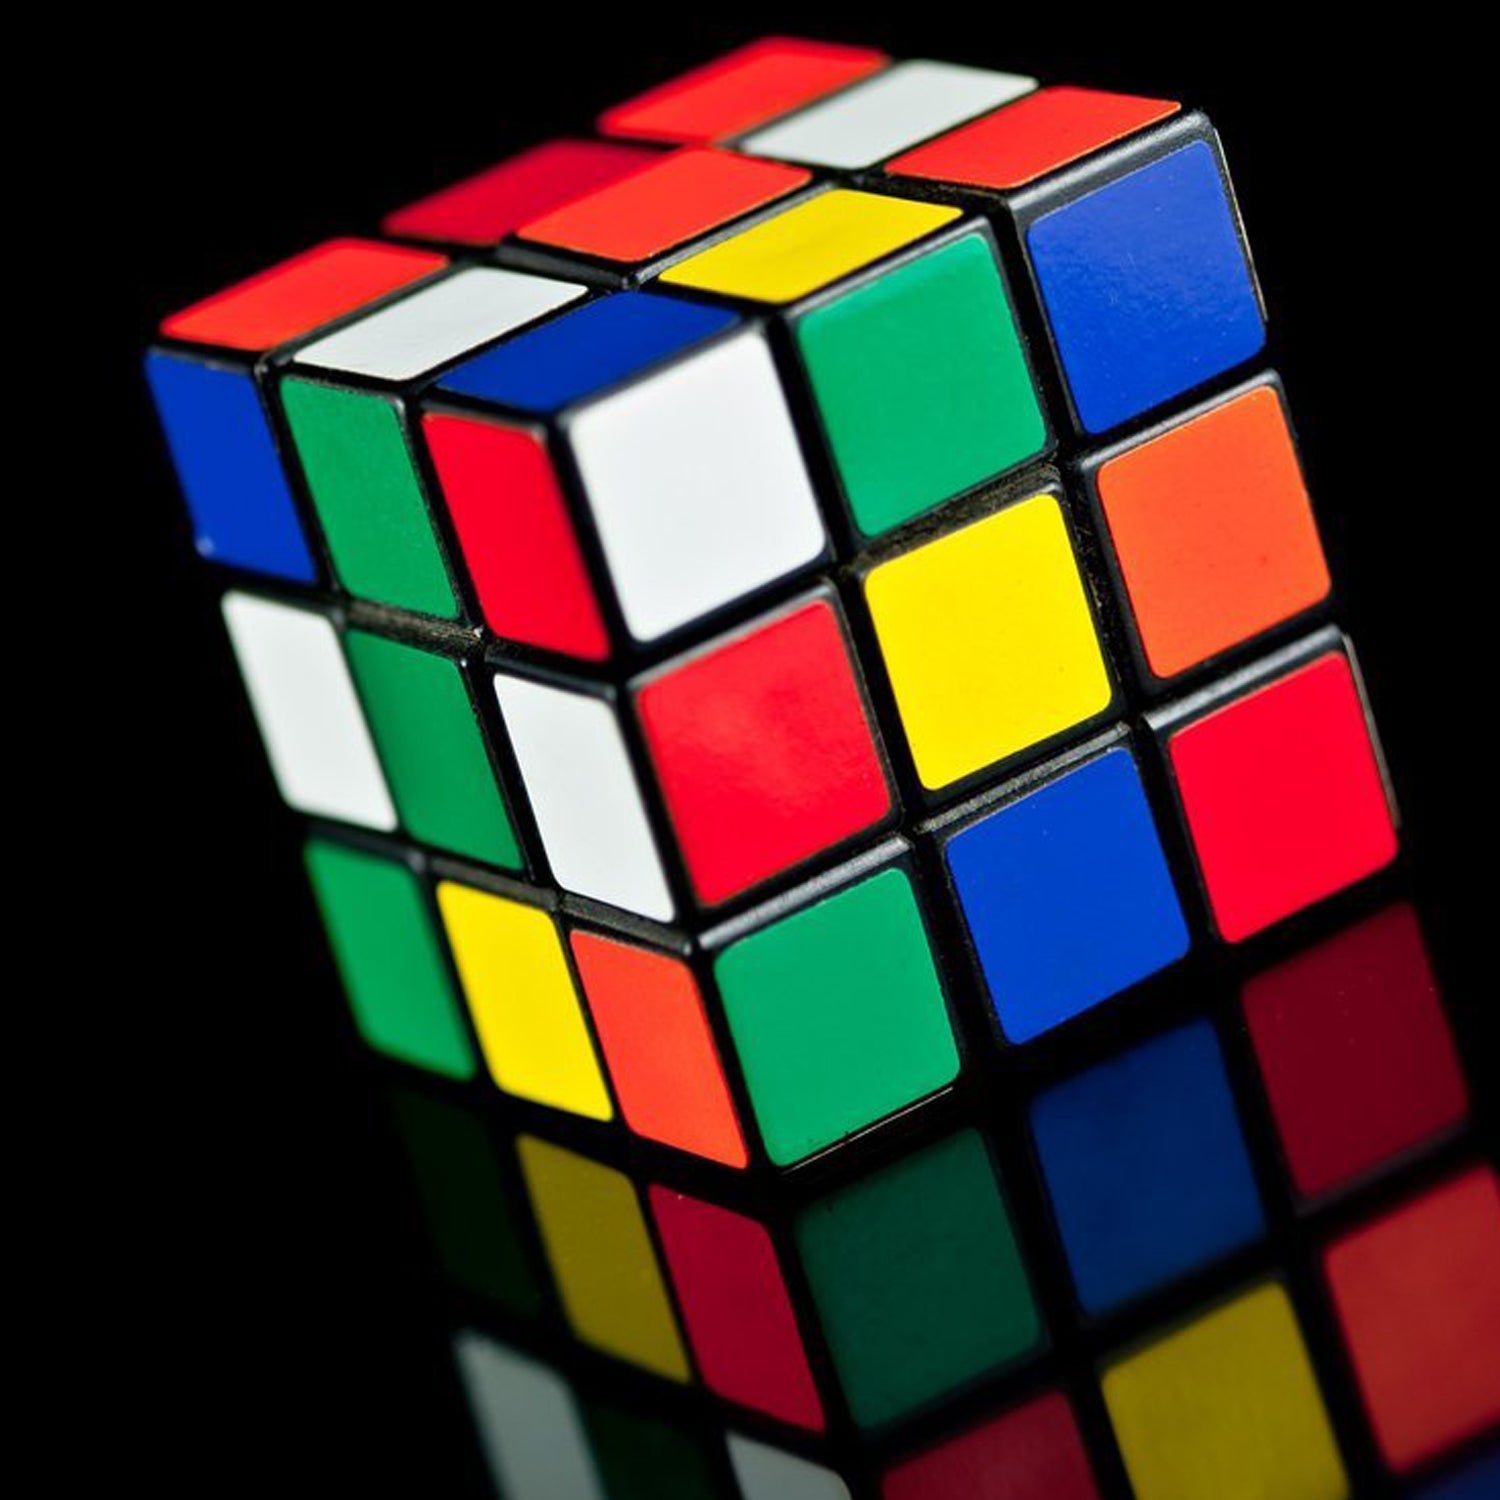 4817 Plastic Fancy 3x3 Small Cube Puzzles Game - 2 Pieces (Multicolour) 